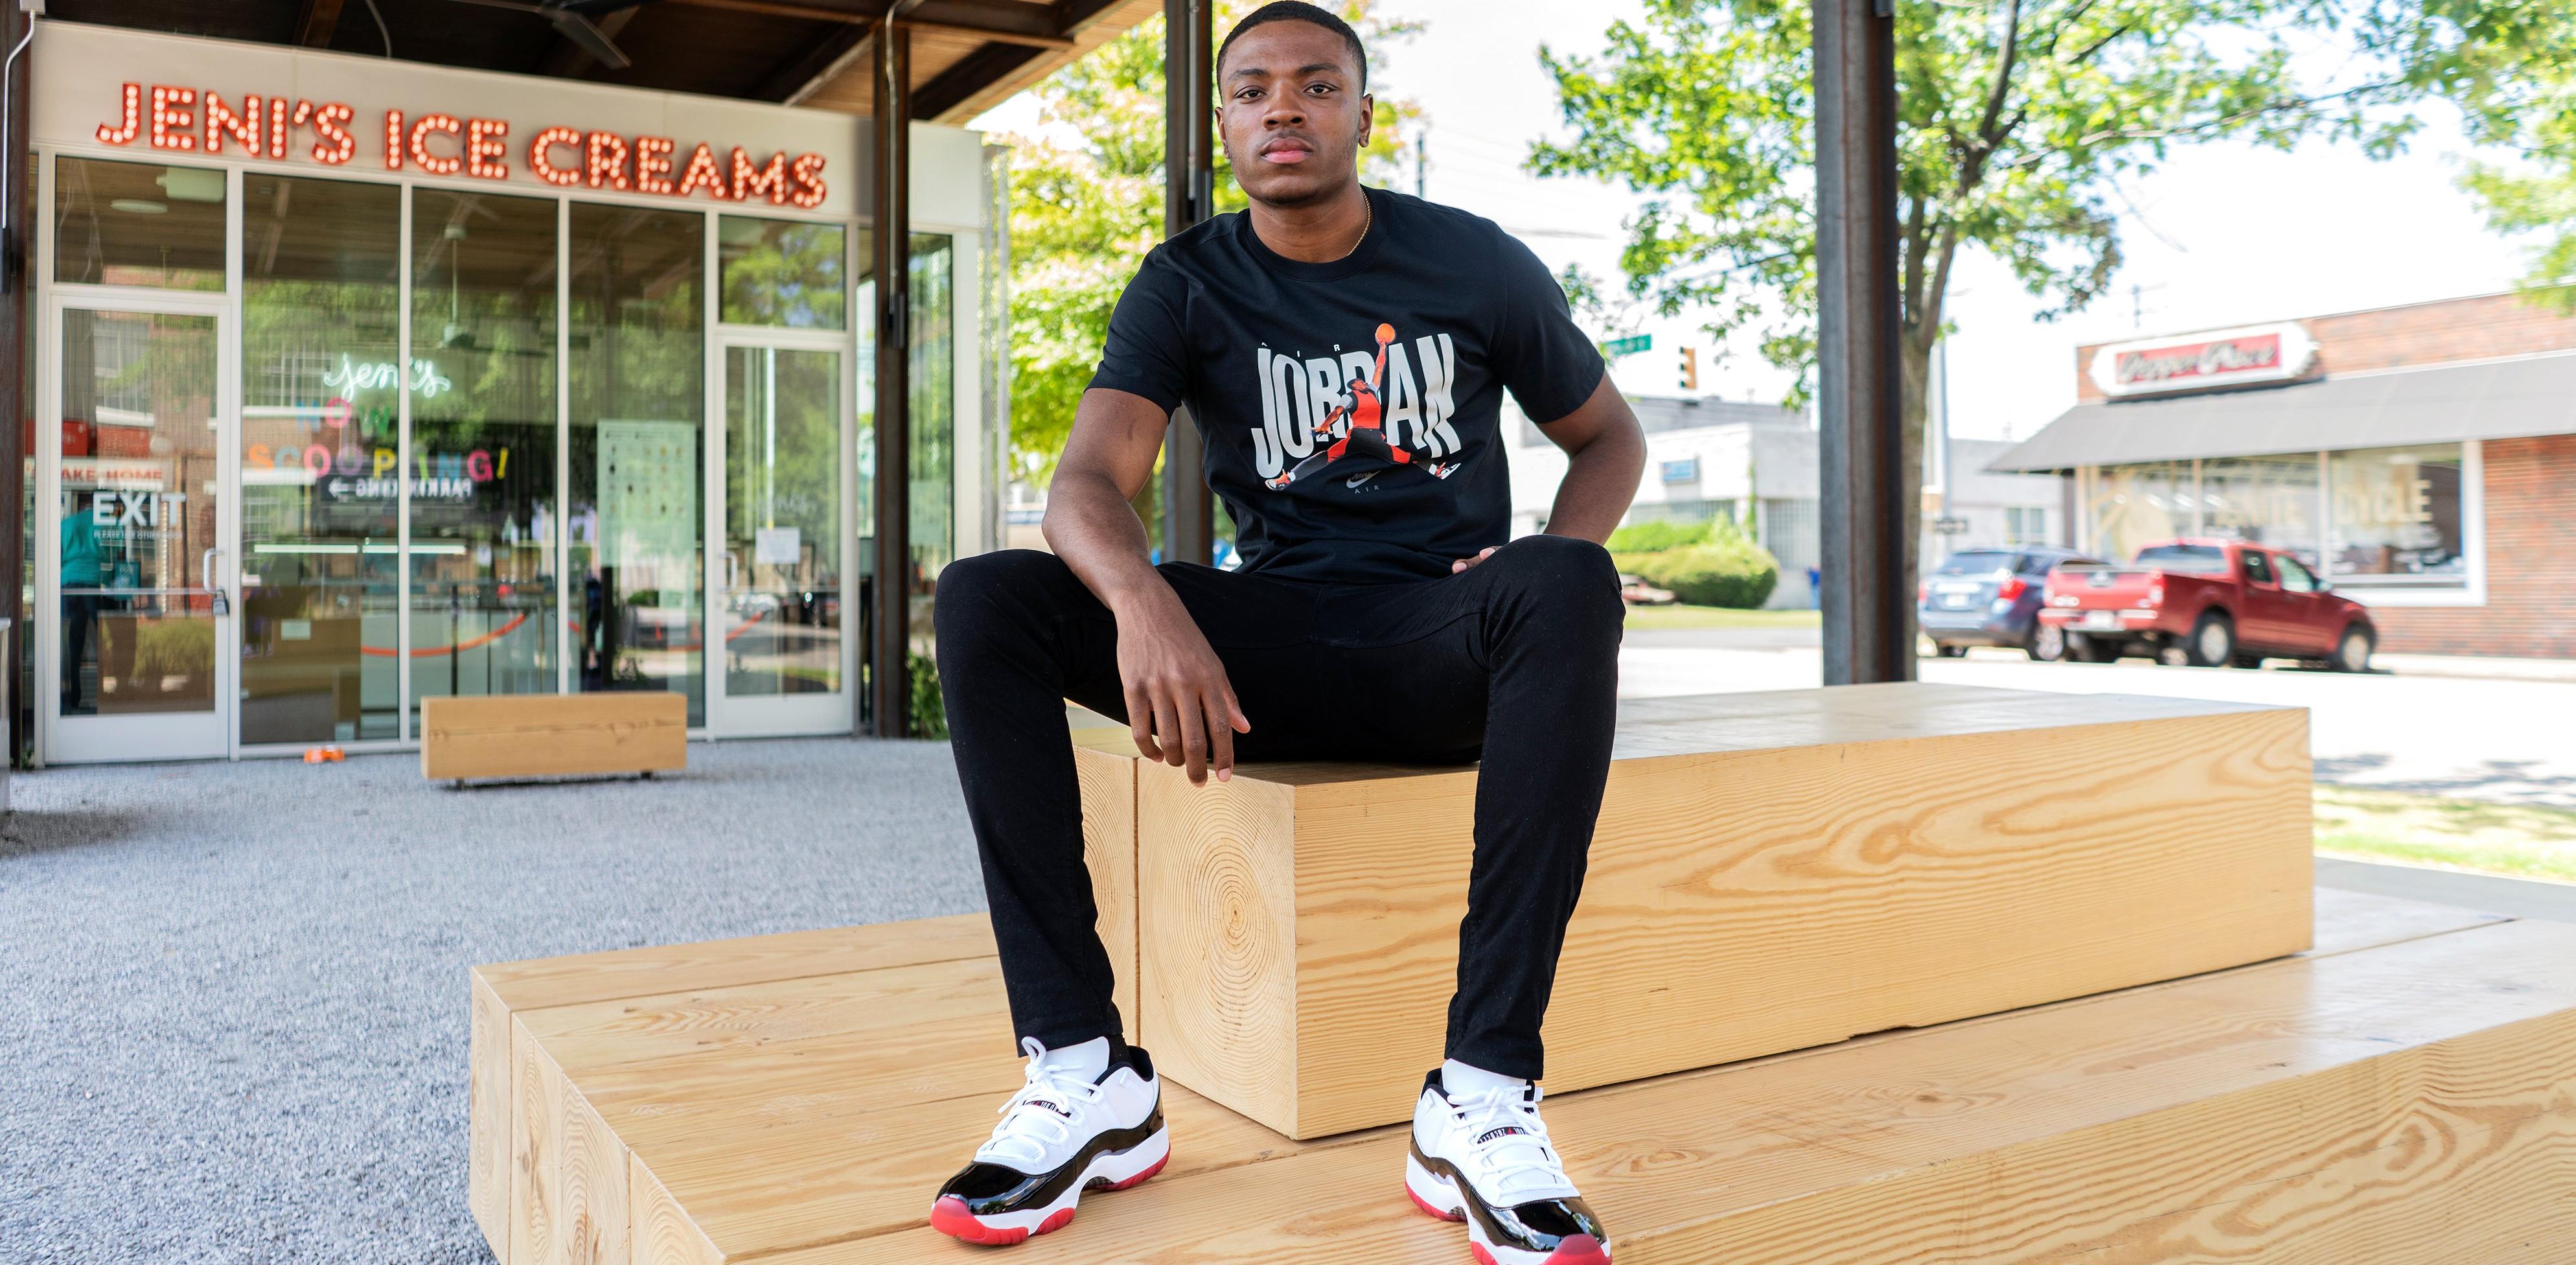 Sneakers Release – Jordan Retro Low “White Bred” White/University Red/Black and Kids'